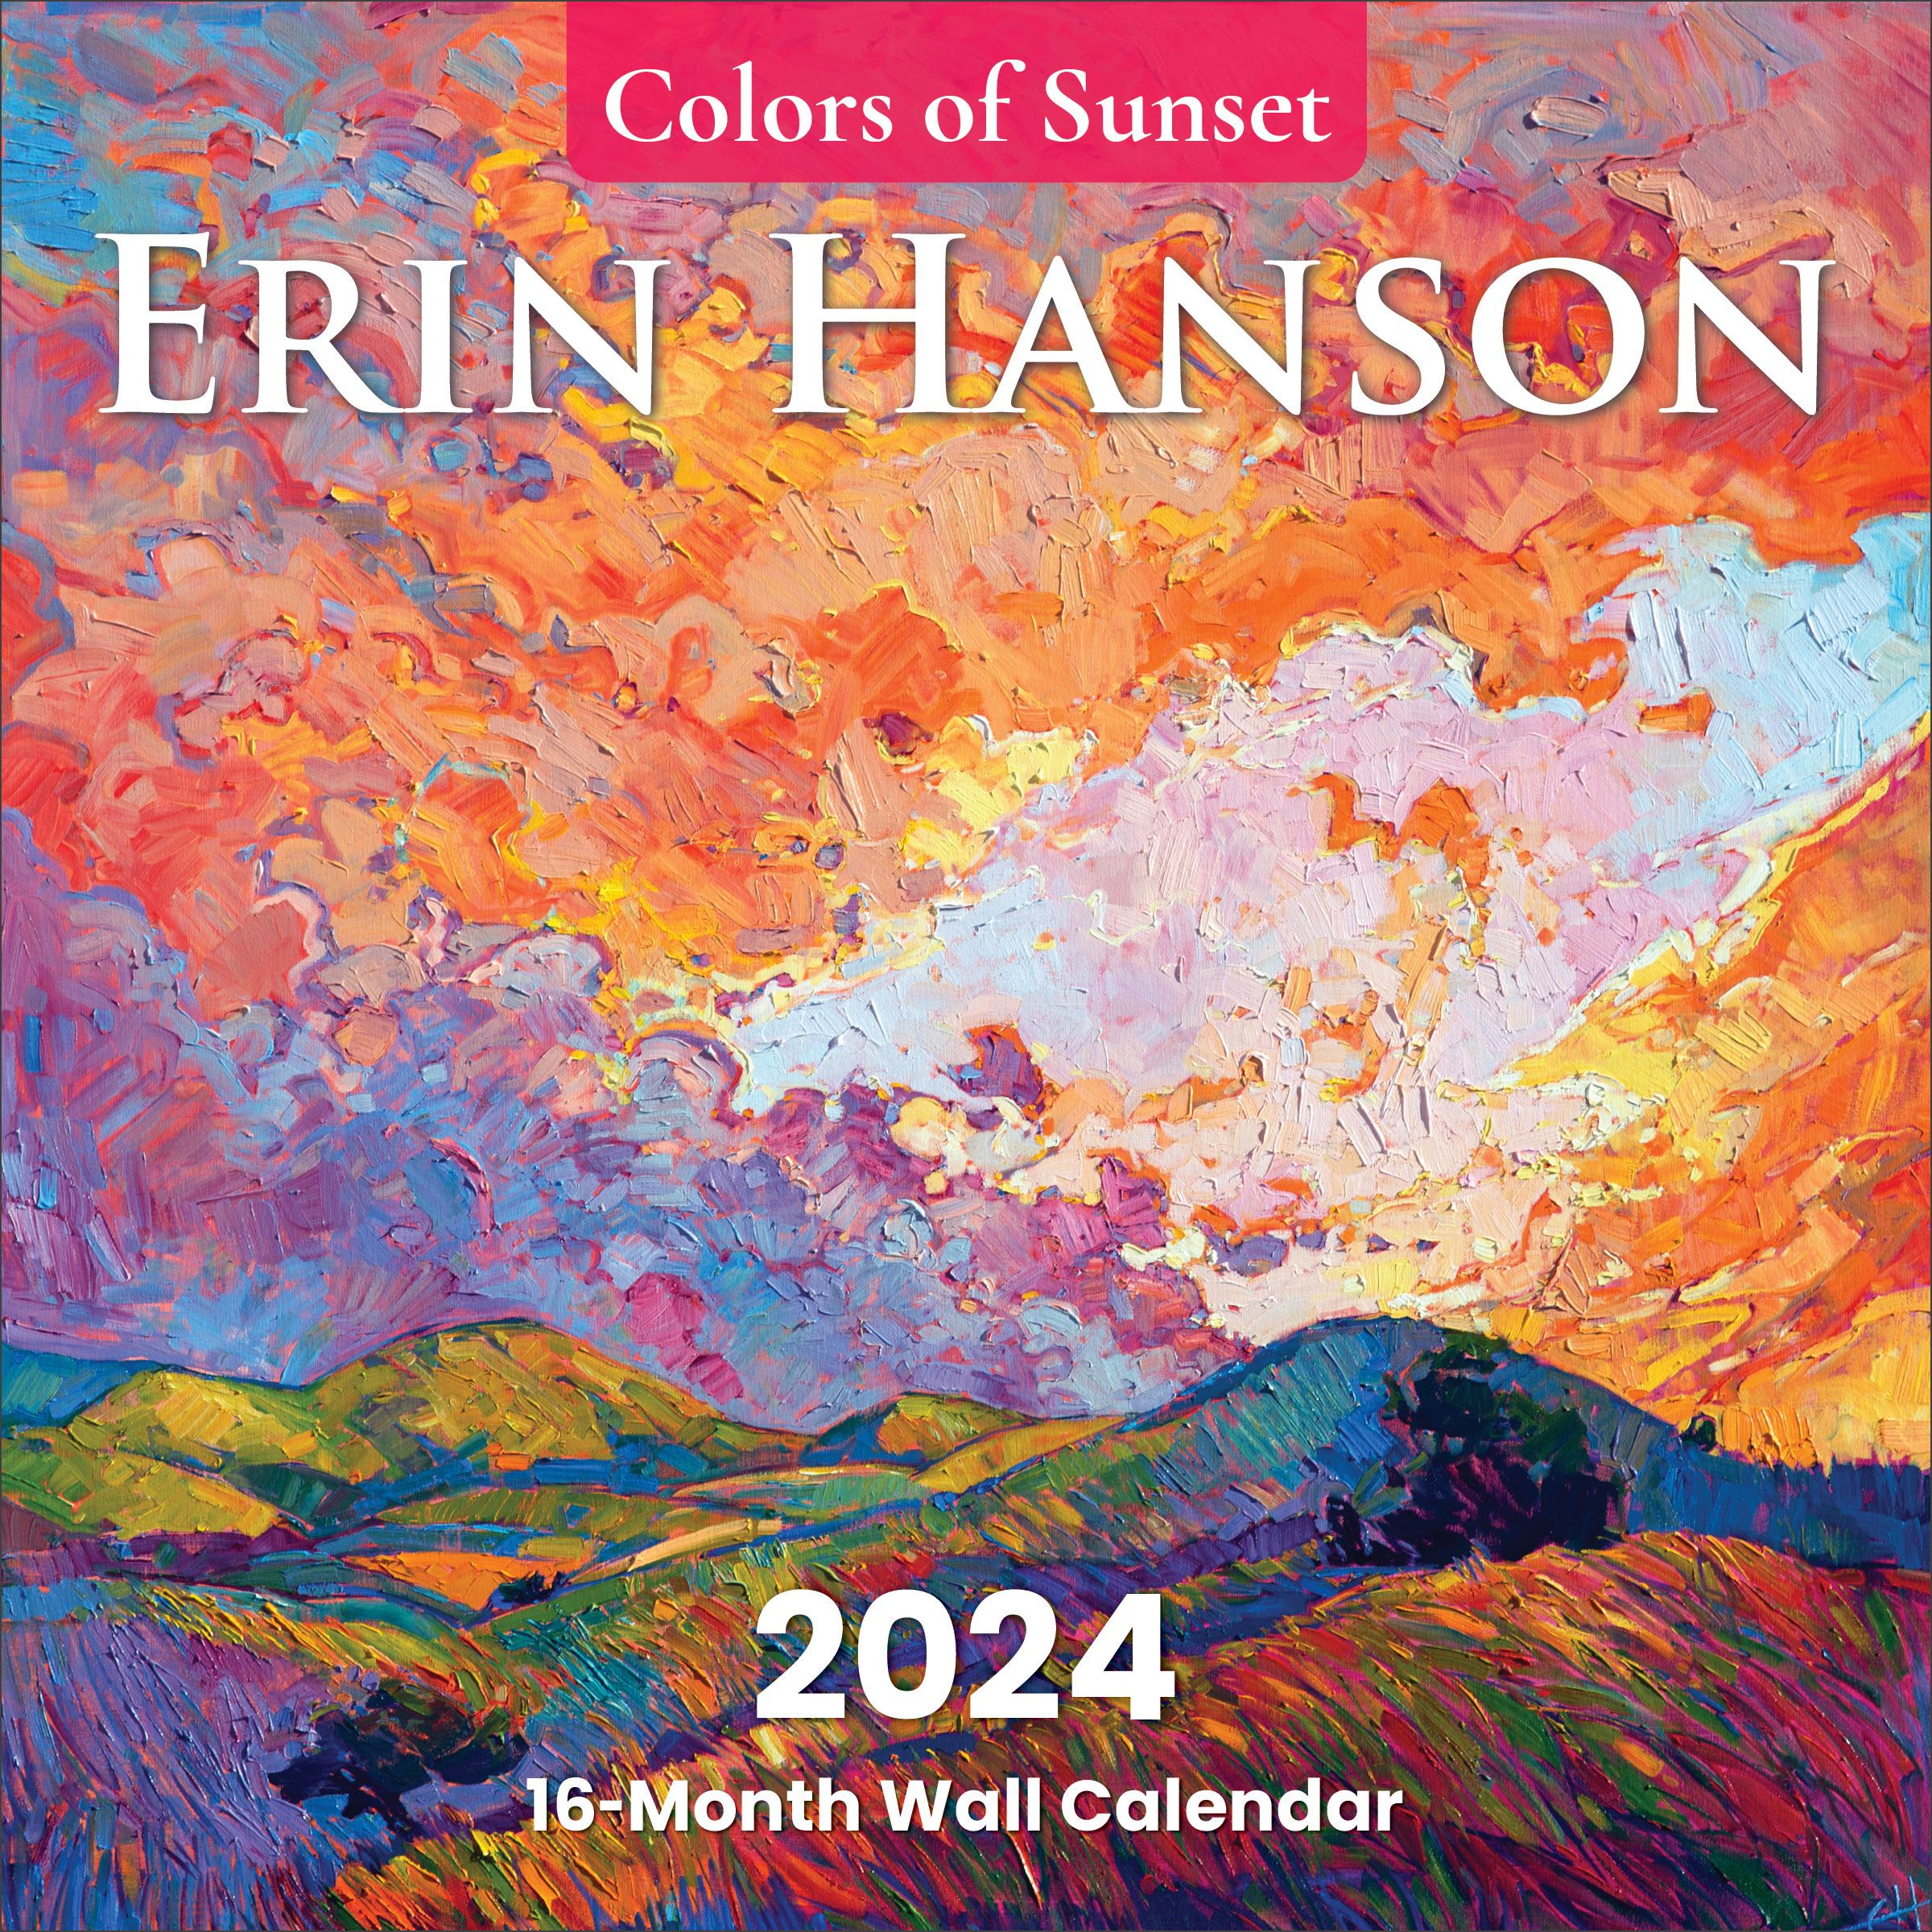 2024 Calendar - Colors of Sunset Image 0